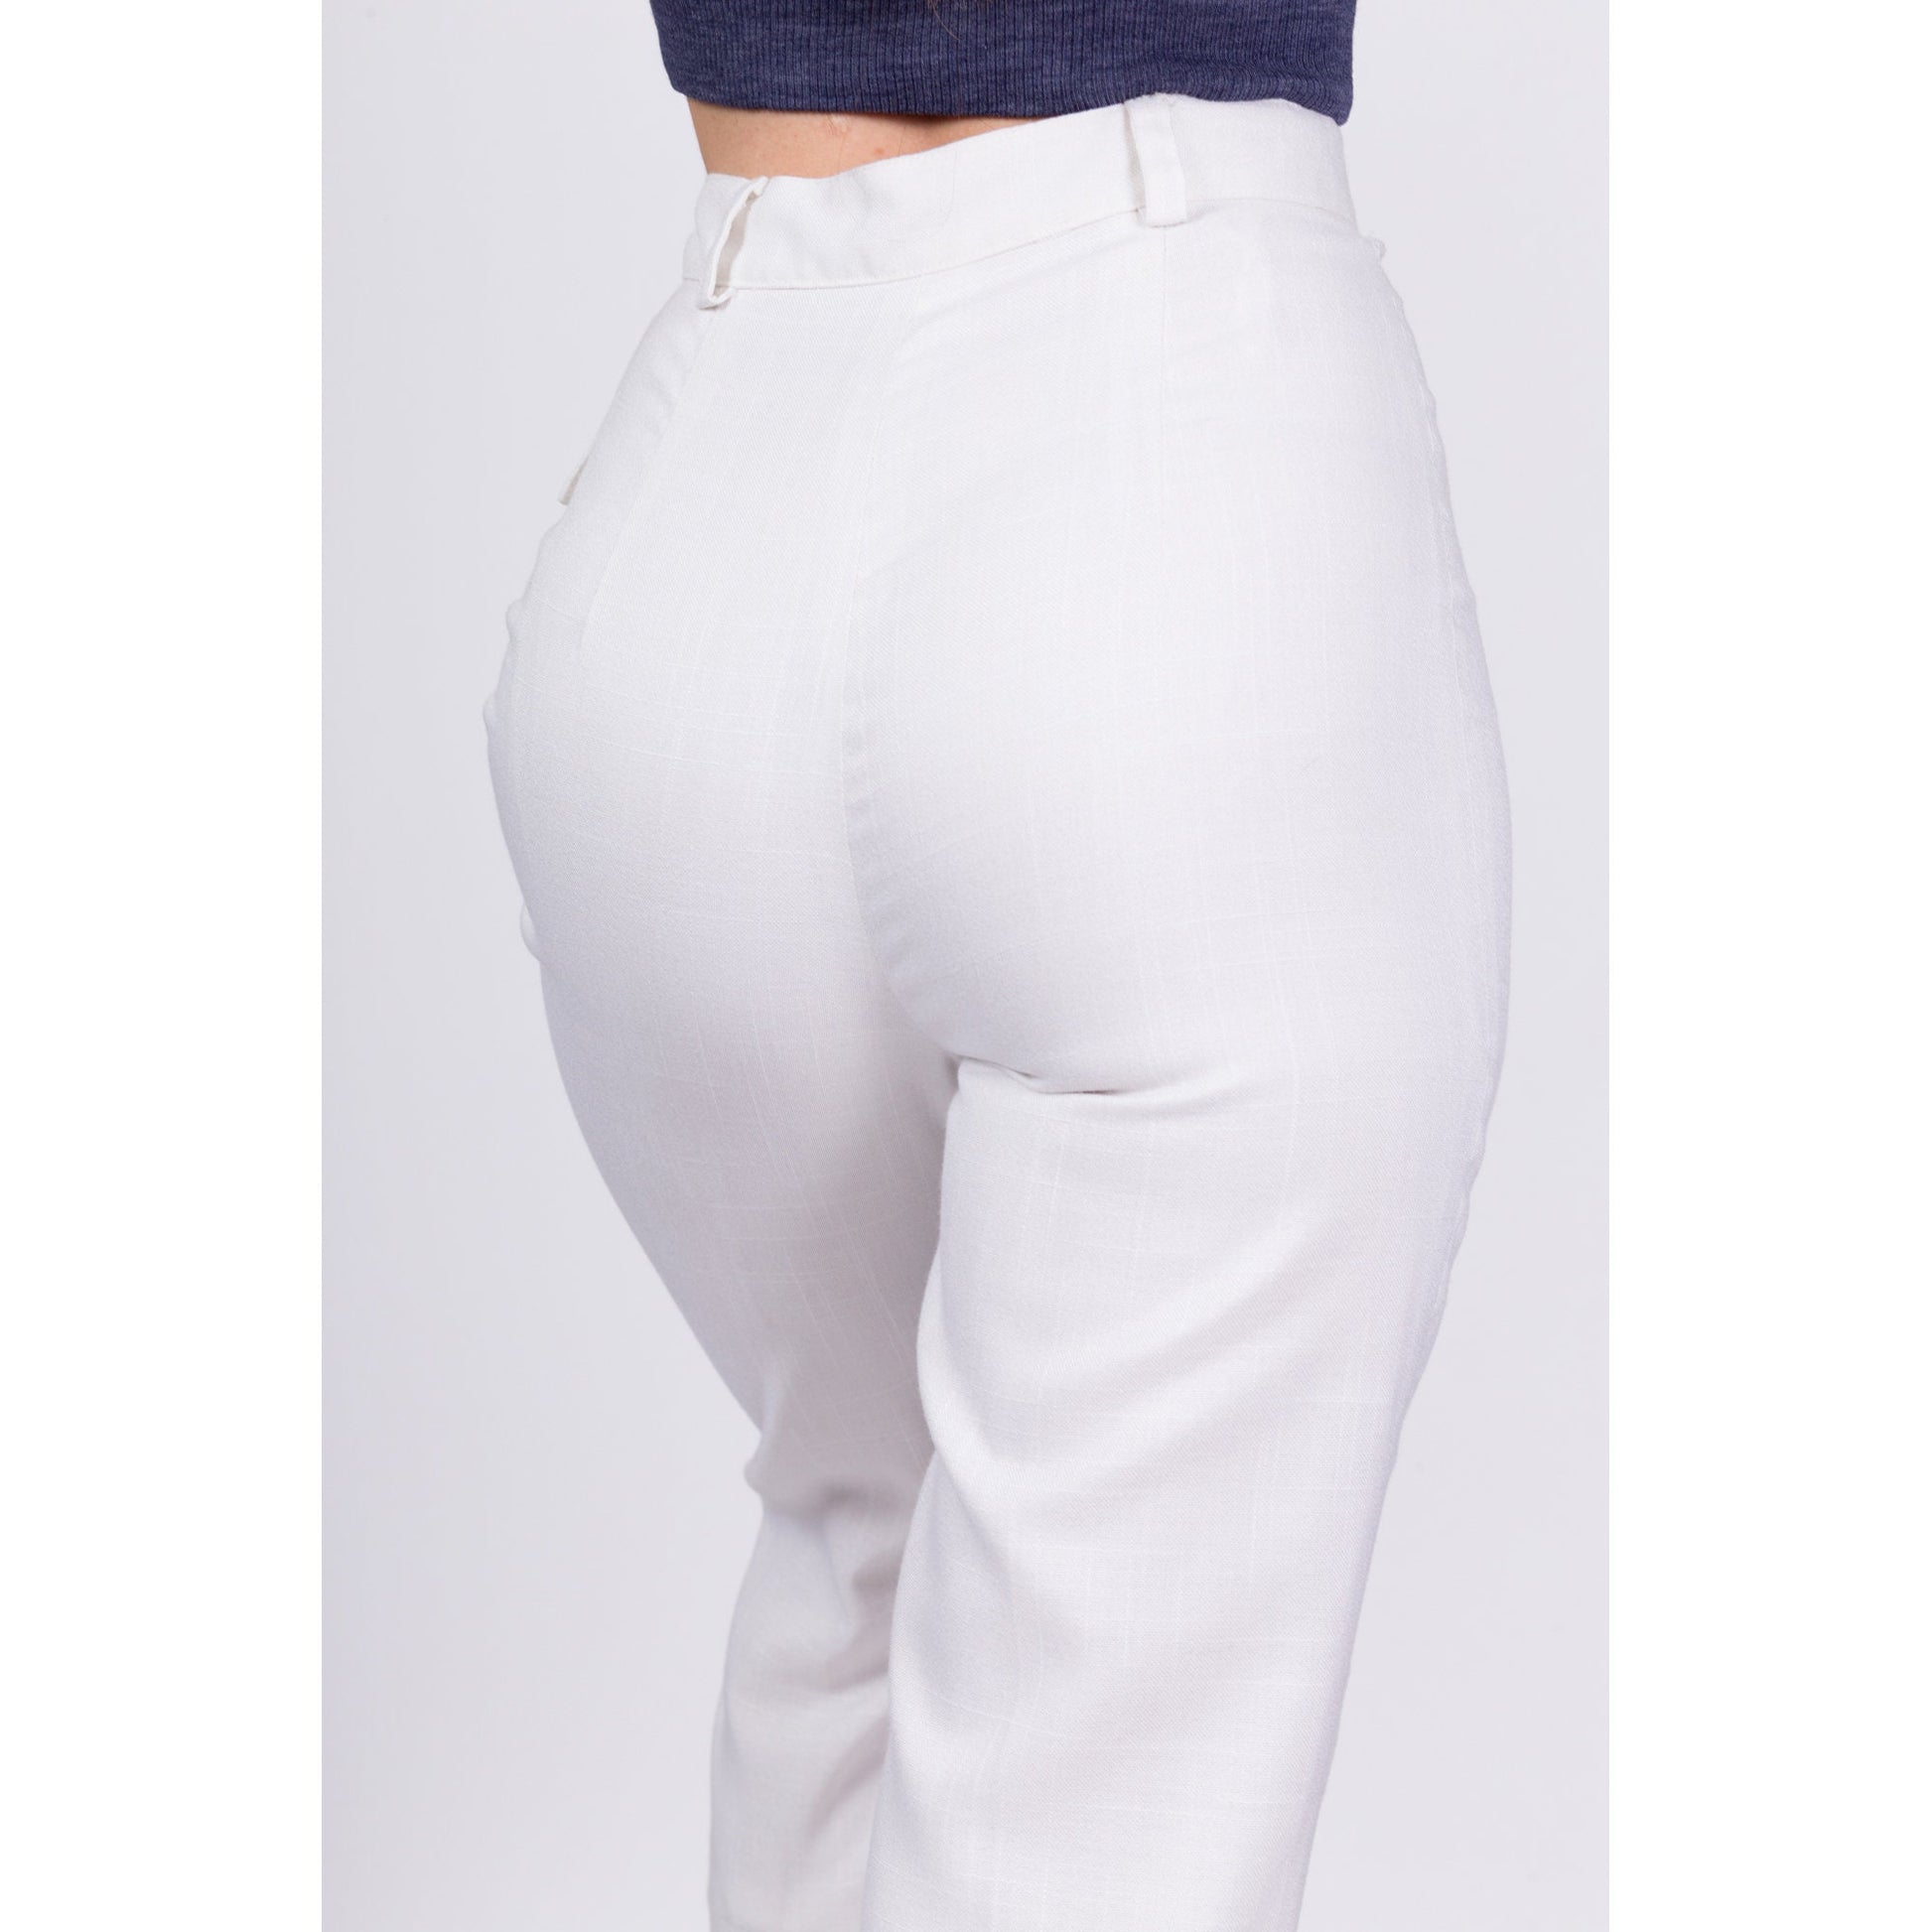 80s White High Waisted Capri Pants - Petite Extra Small, 23